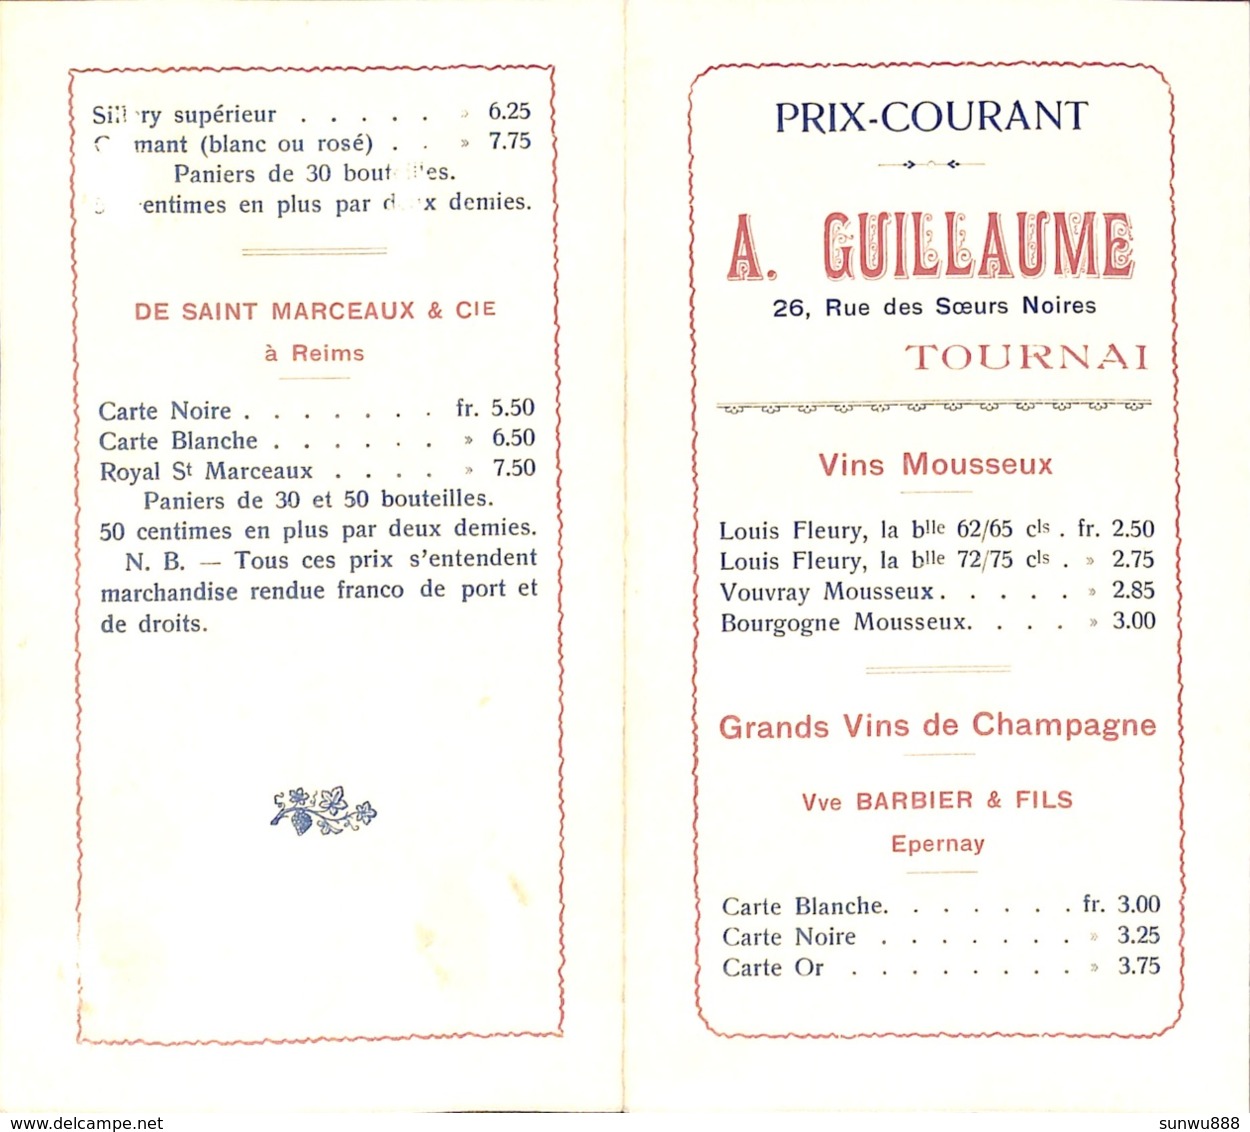 Prix-Courant A. Guillaume Tournai - Vins Mousseux, Champagne Epernay, Crémant... - Lebensmittel